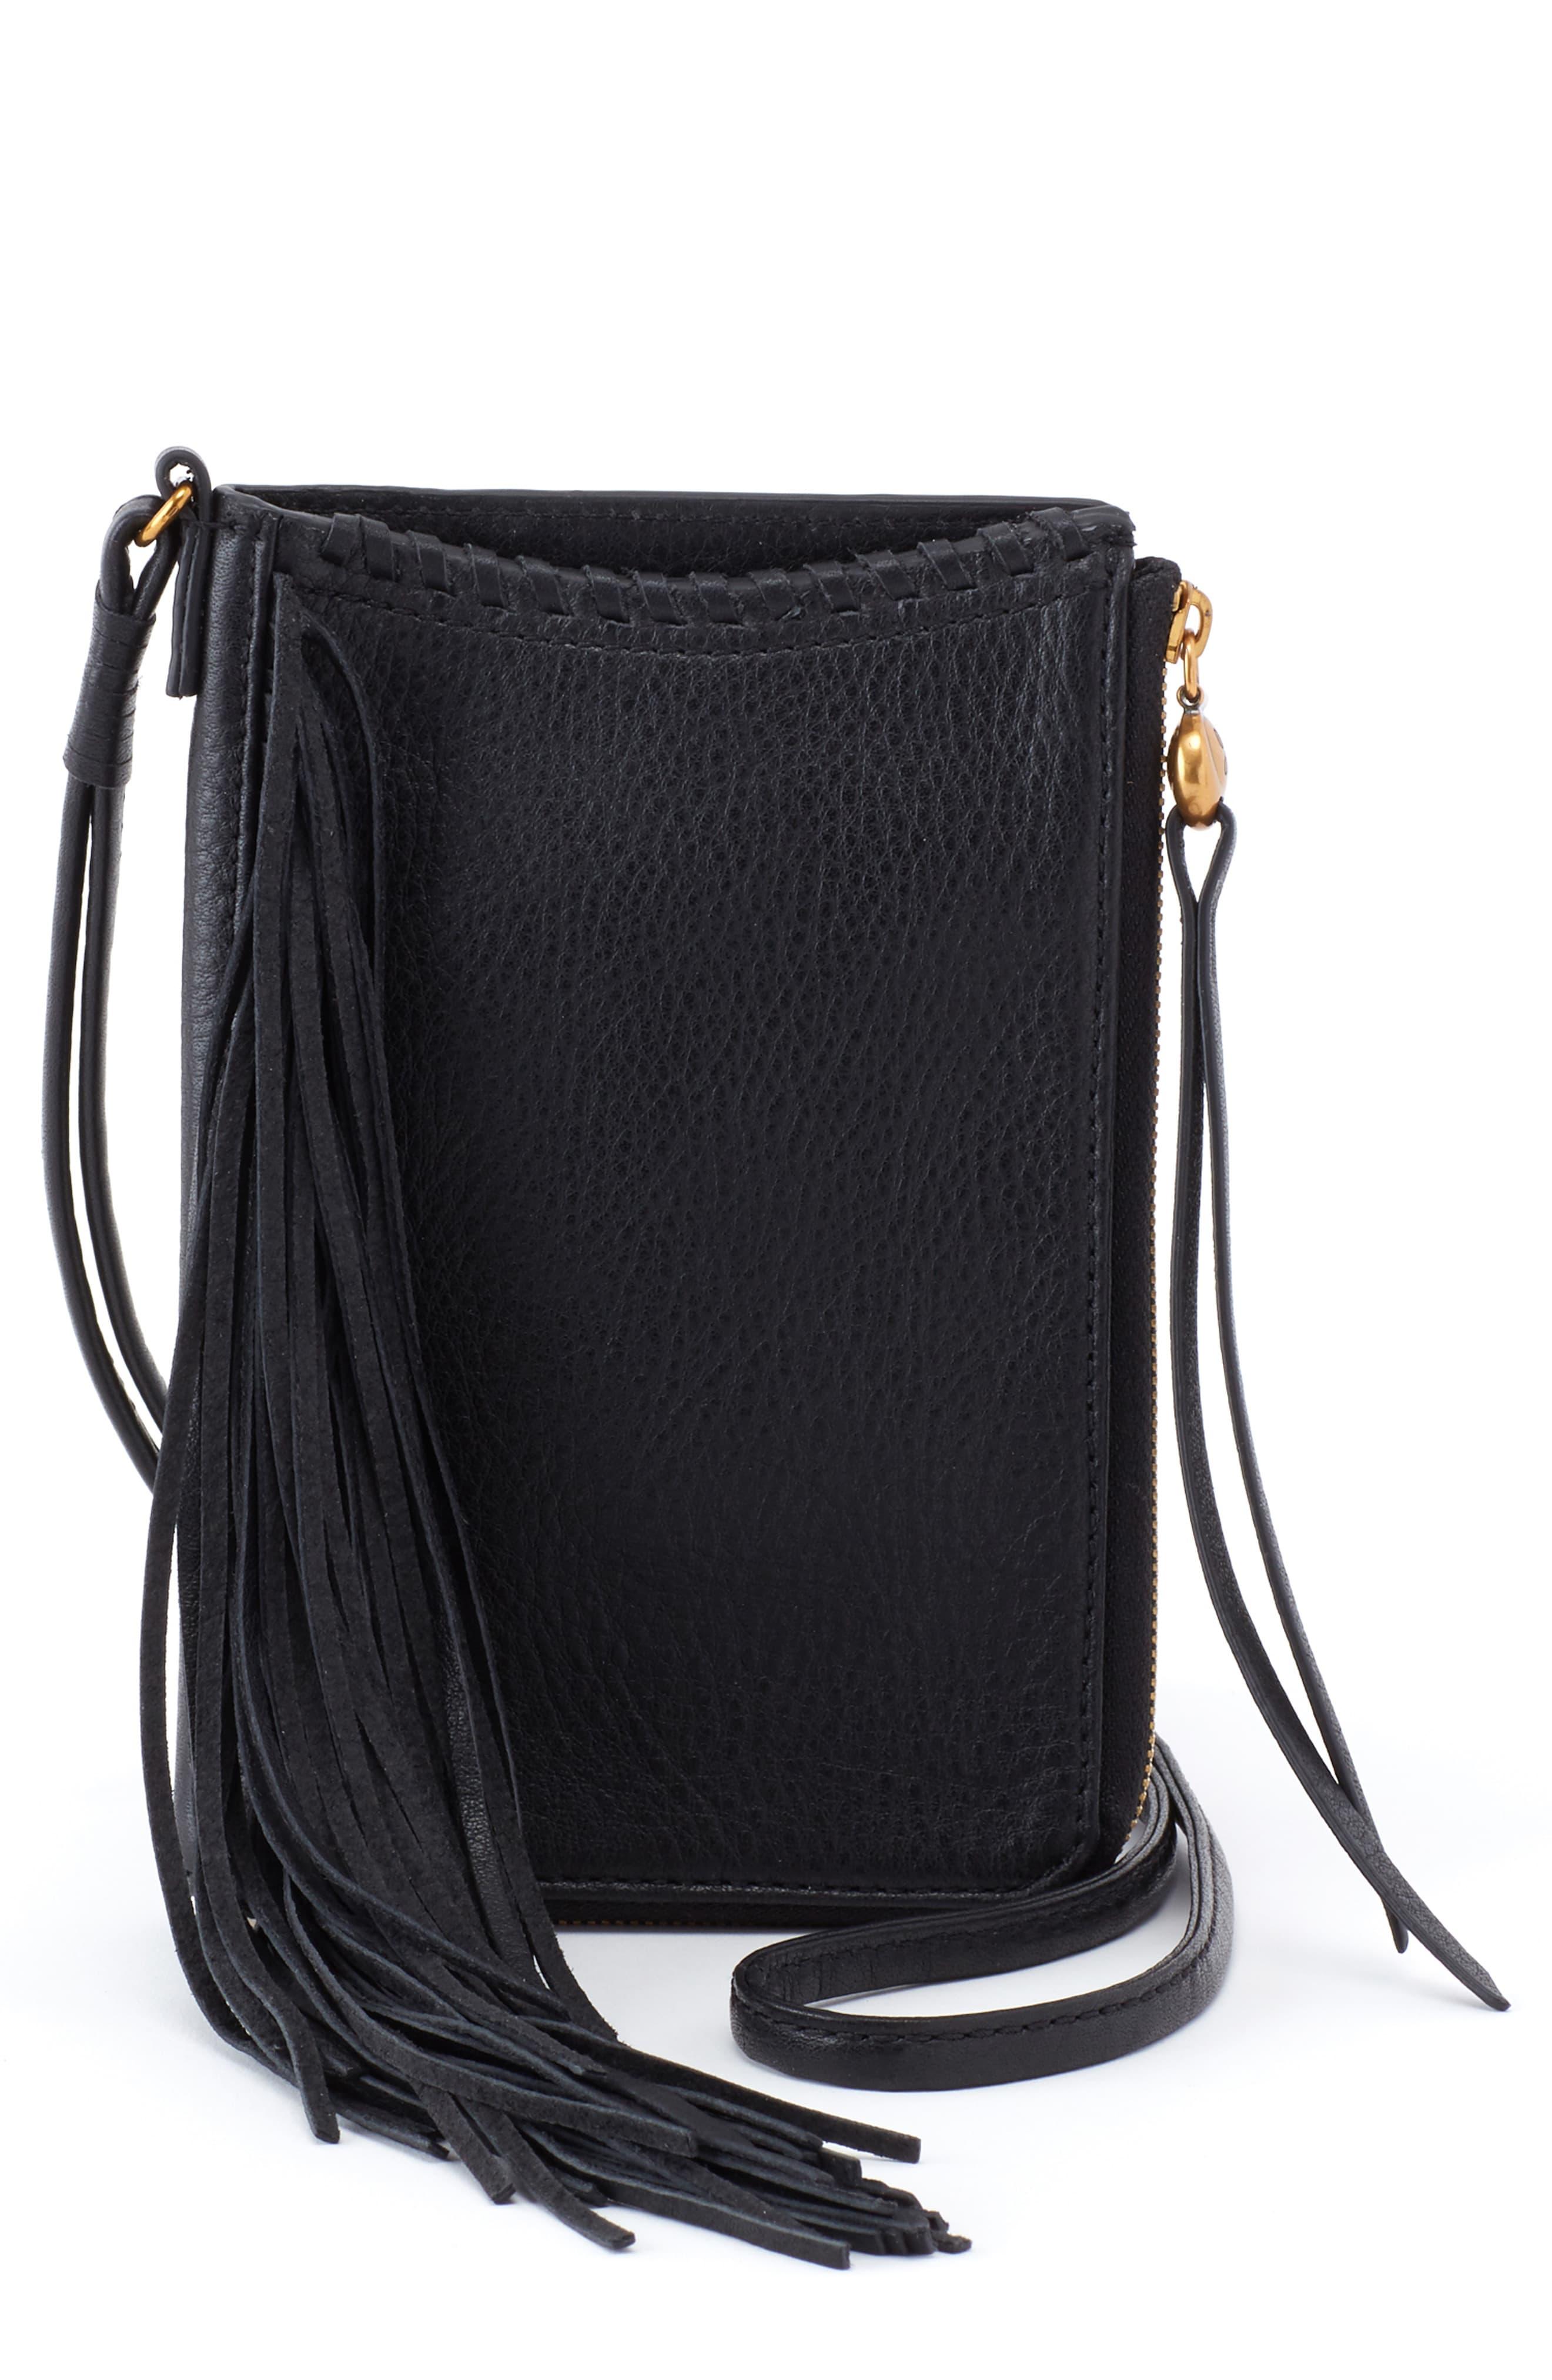 Hobo Moxie Leather Crossbody Bag in Black - Lyst